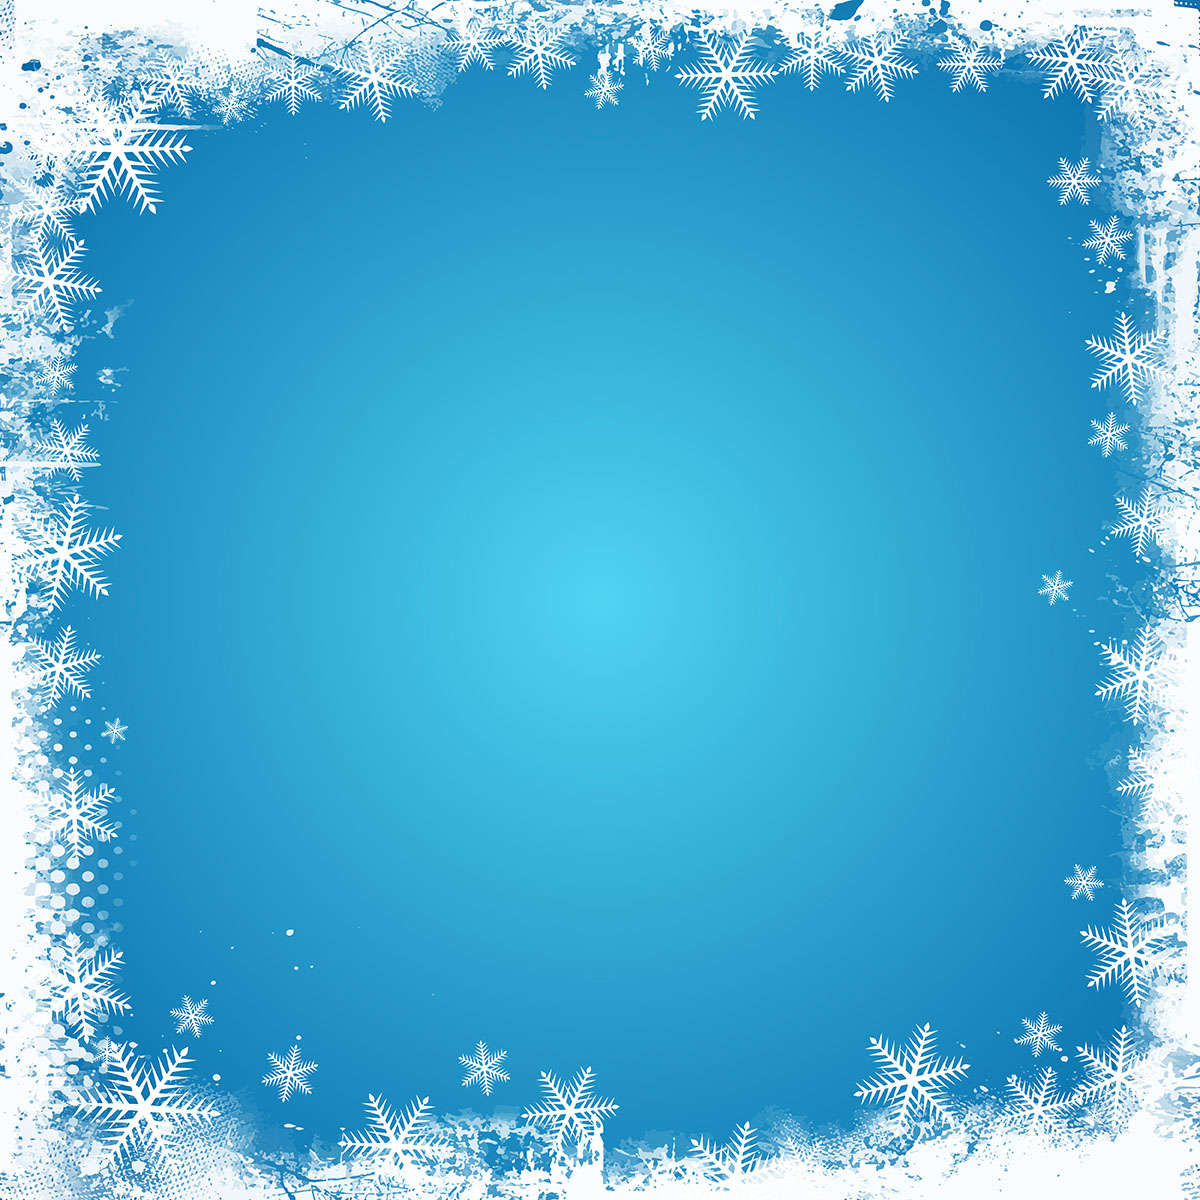 Download Snowflake Border Free Vector Art - (5,604 Free Downloads)